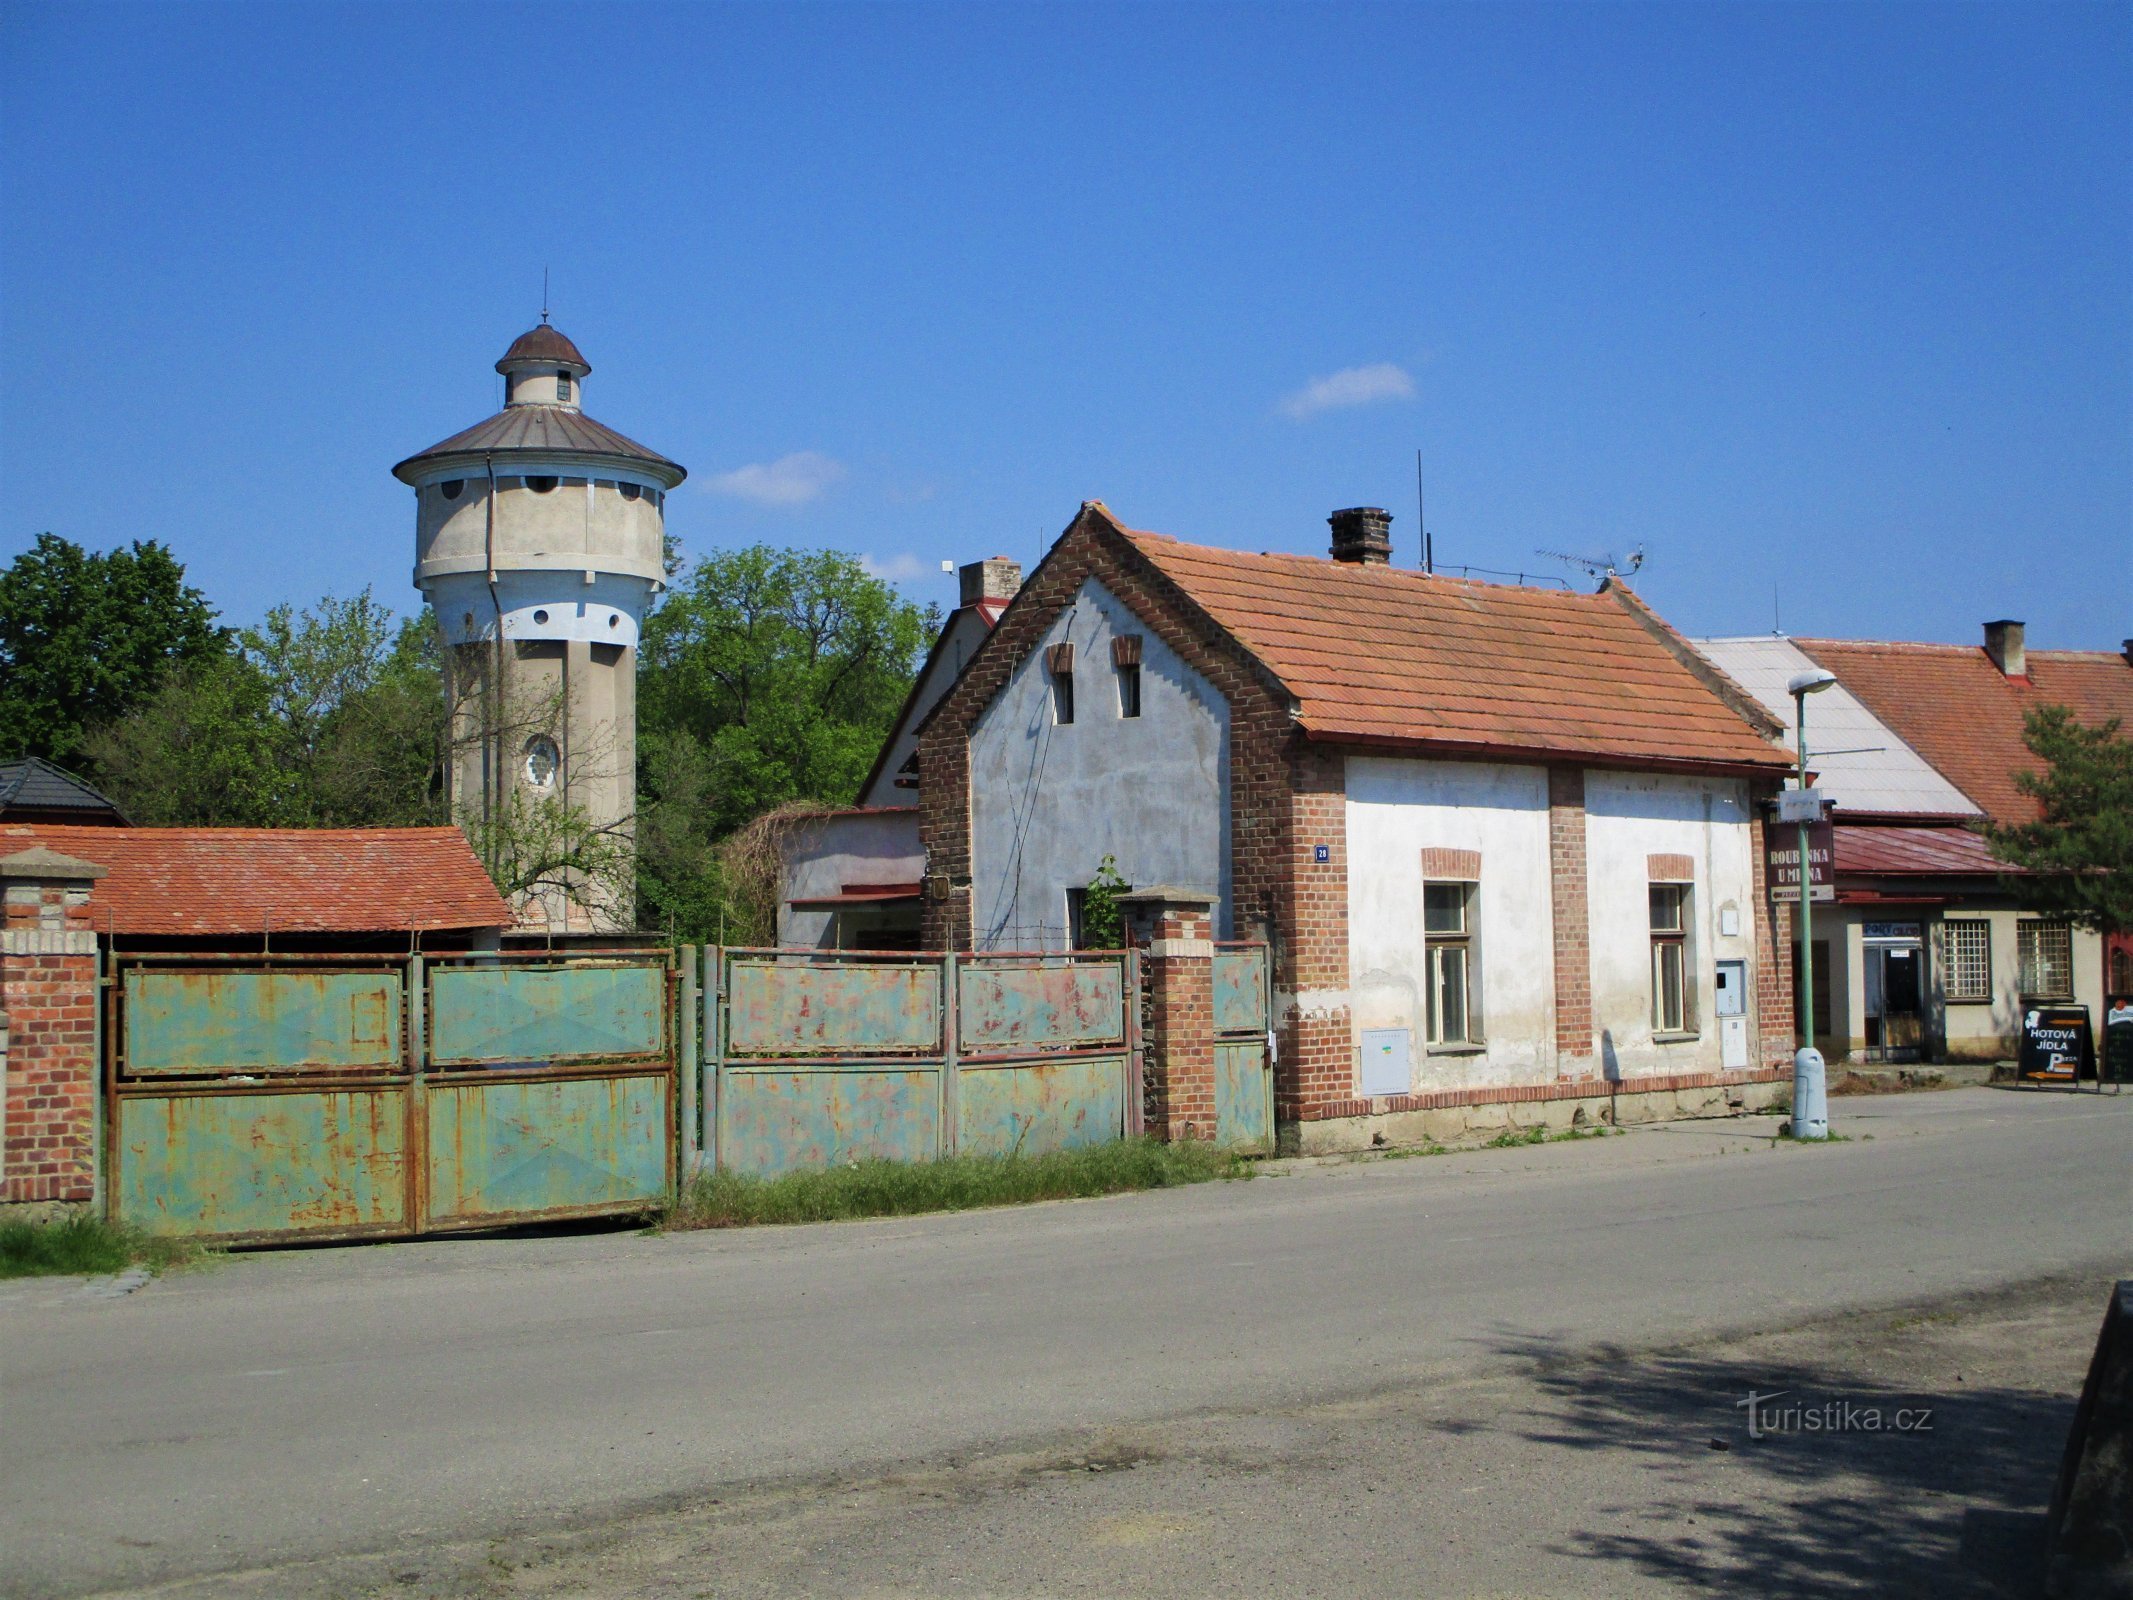 Tower reservoir (Dašice, 16.5.2020)